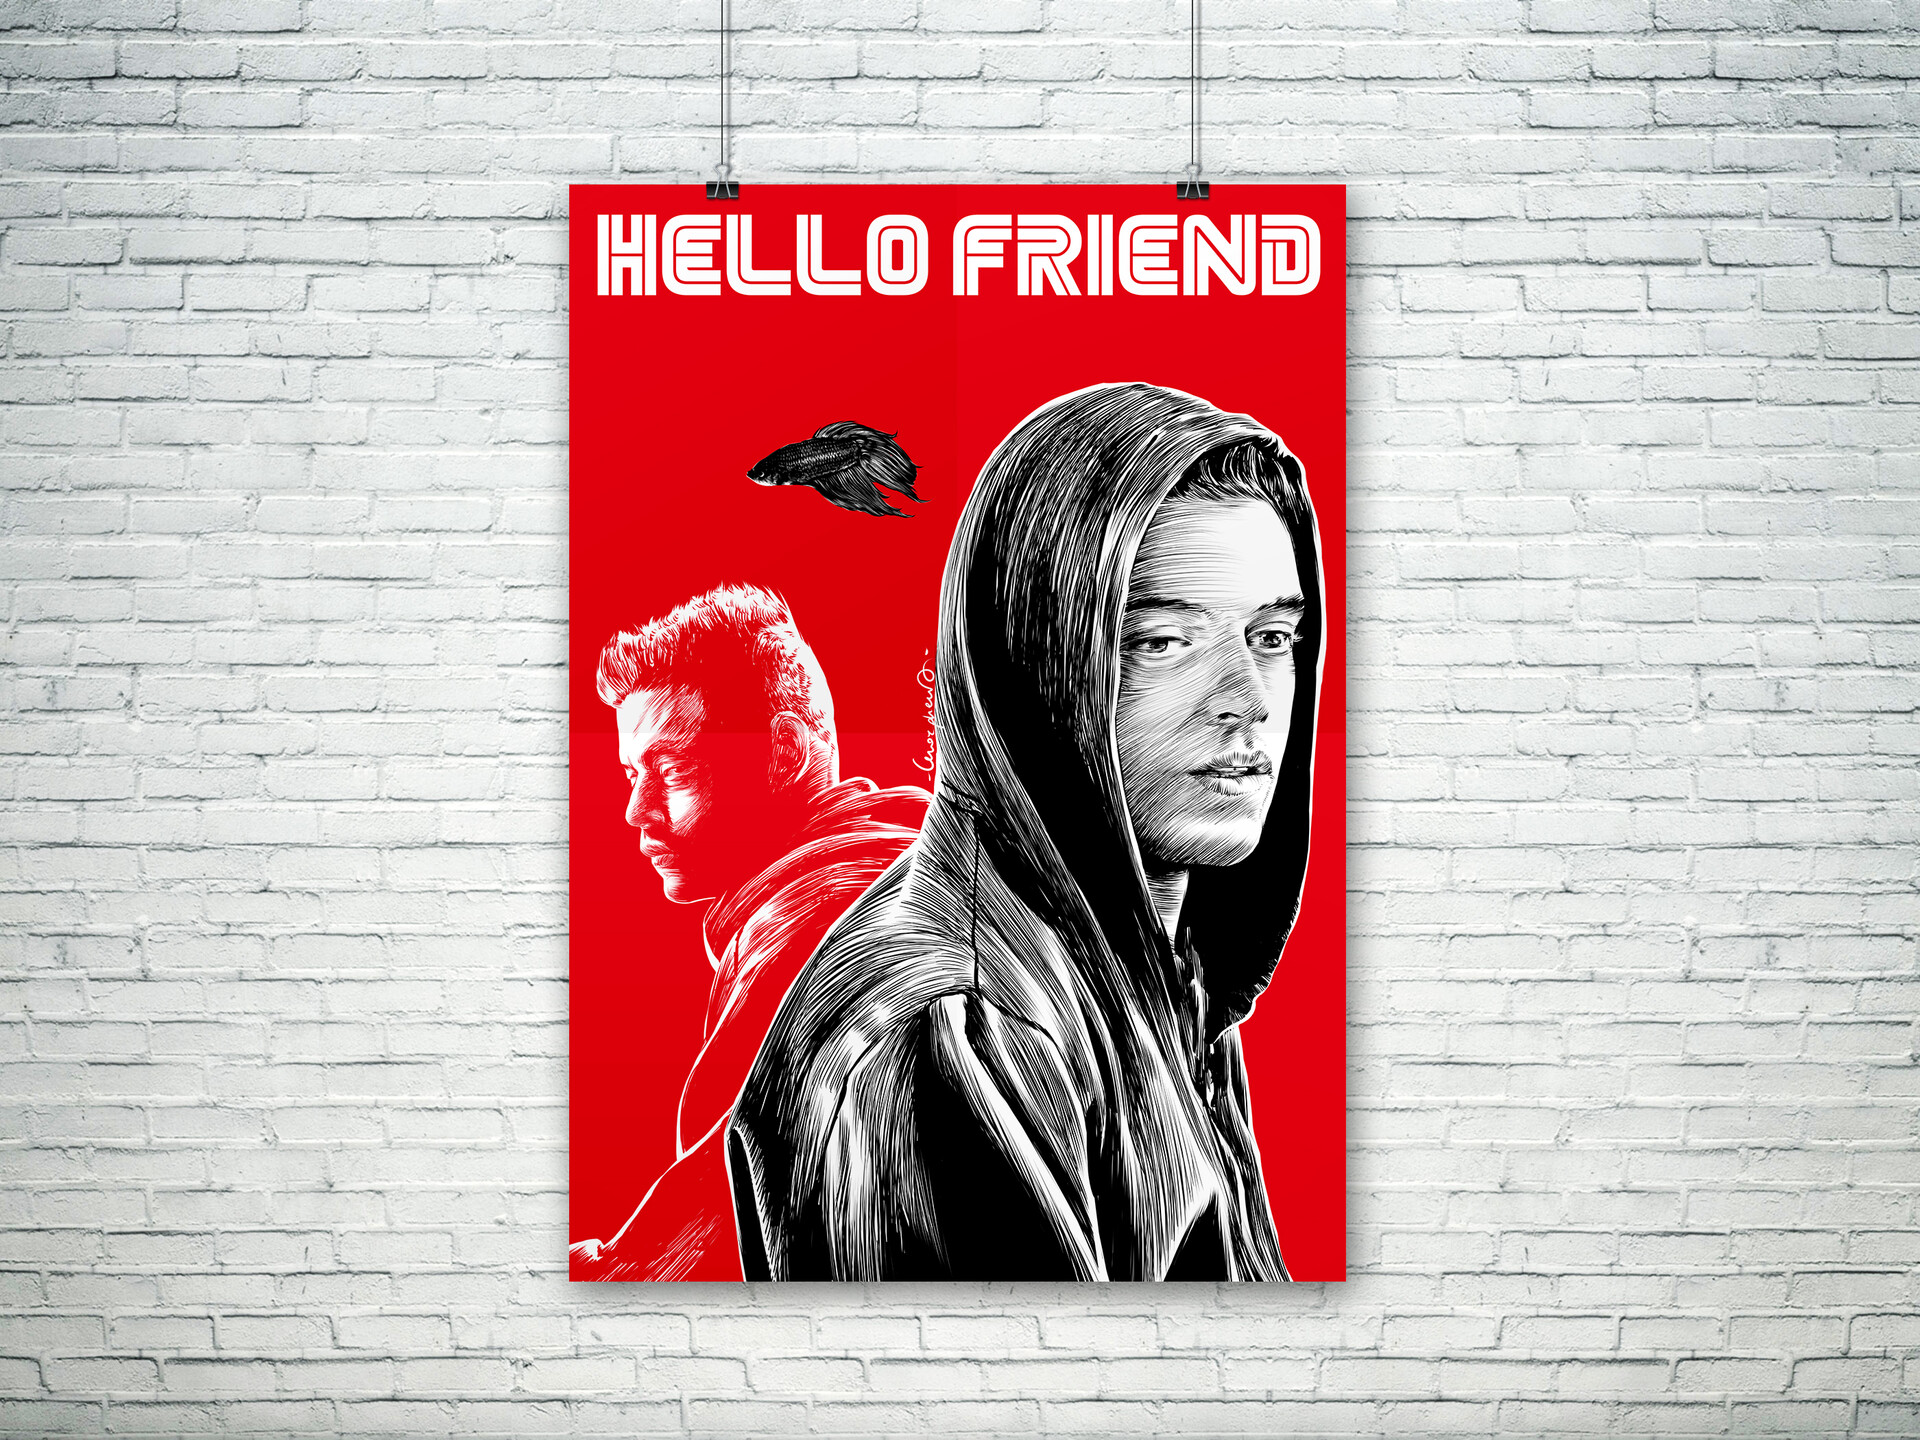 Mr. Robot - Hello friend Poster for Sale by SpaceNigiri